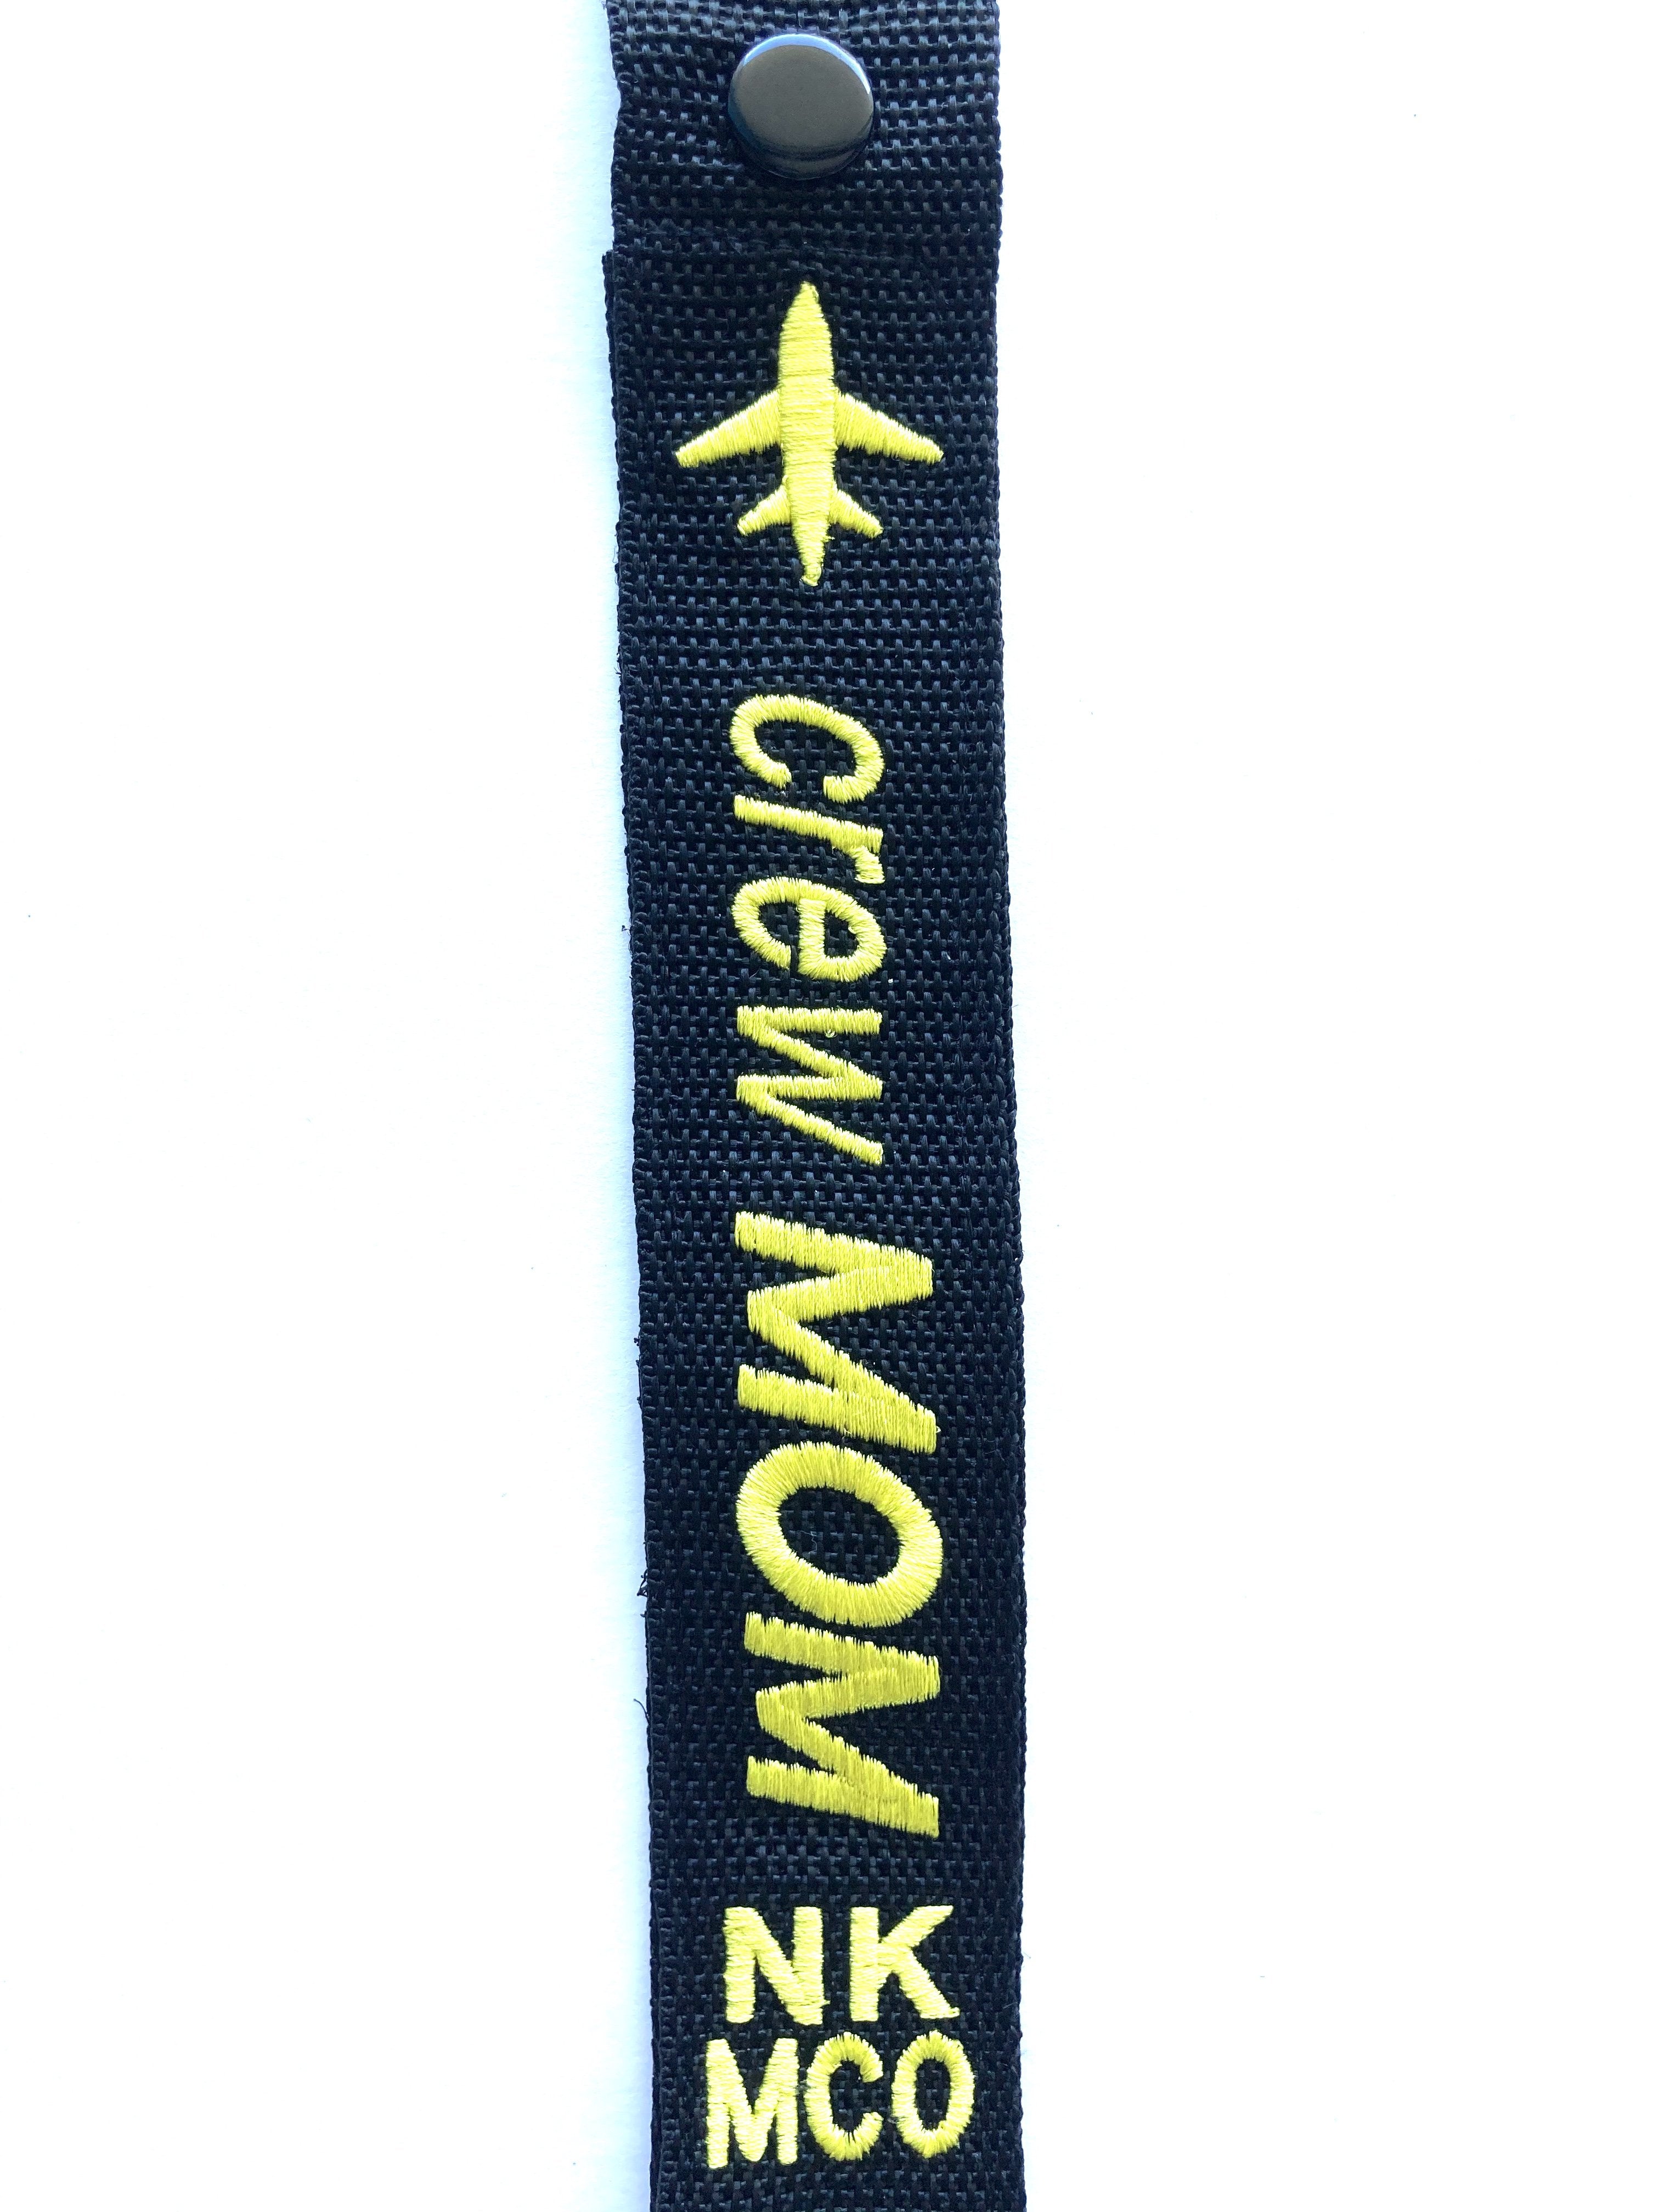 CREW Luggage Tag - MCO Mom NK